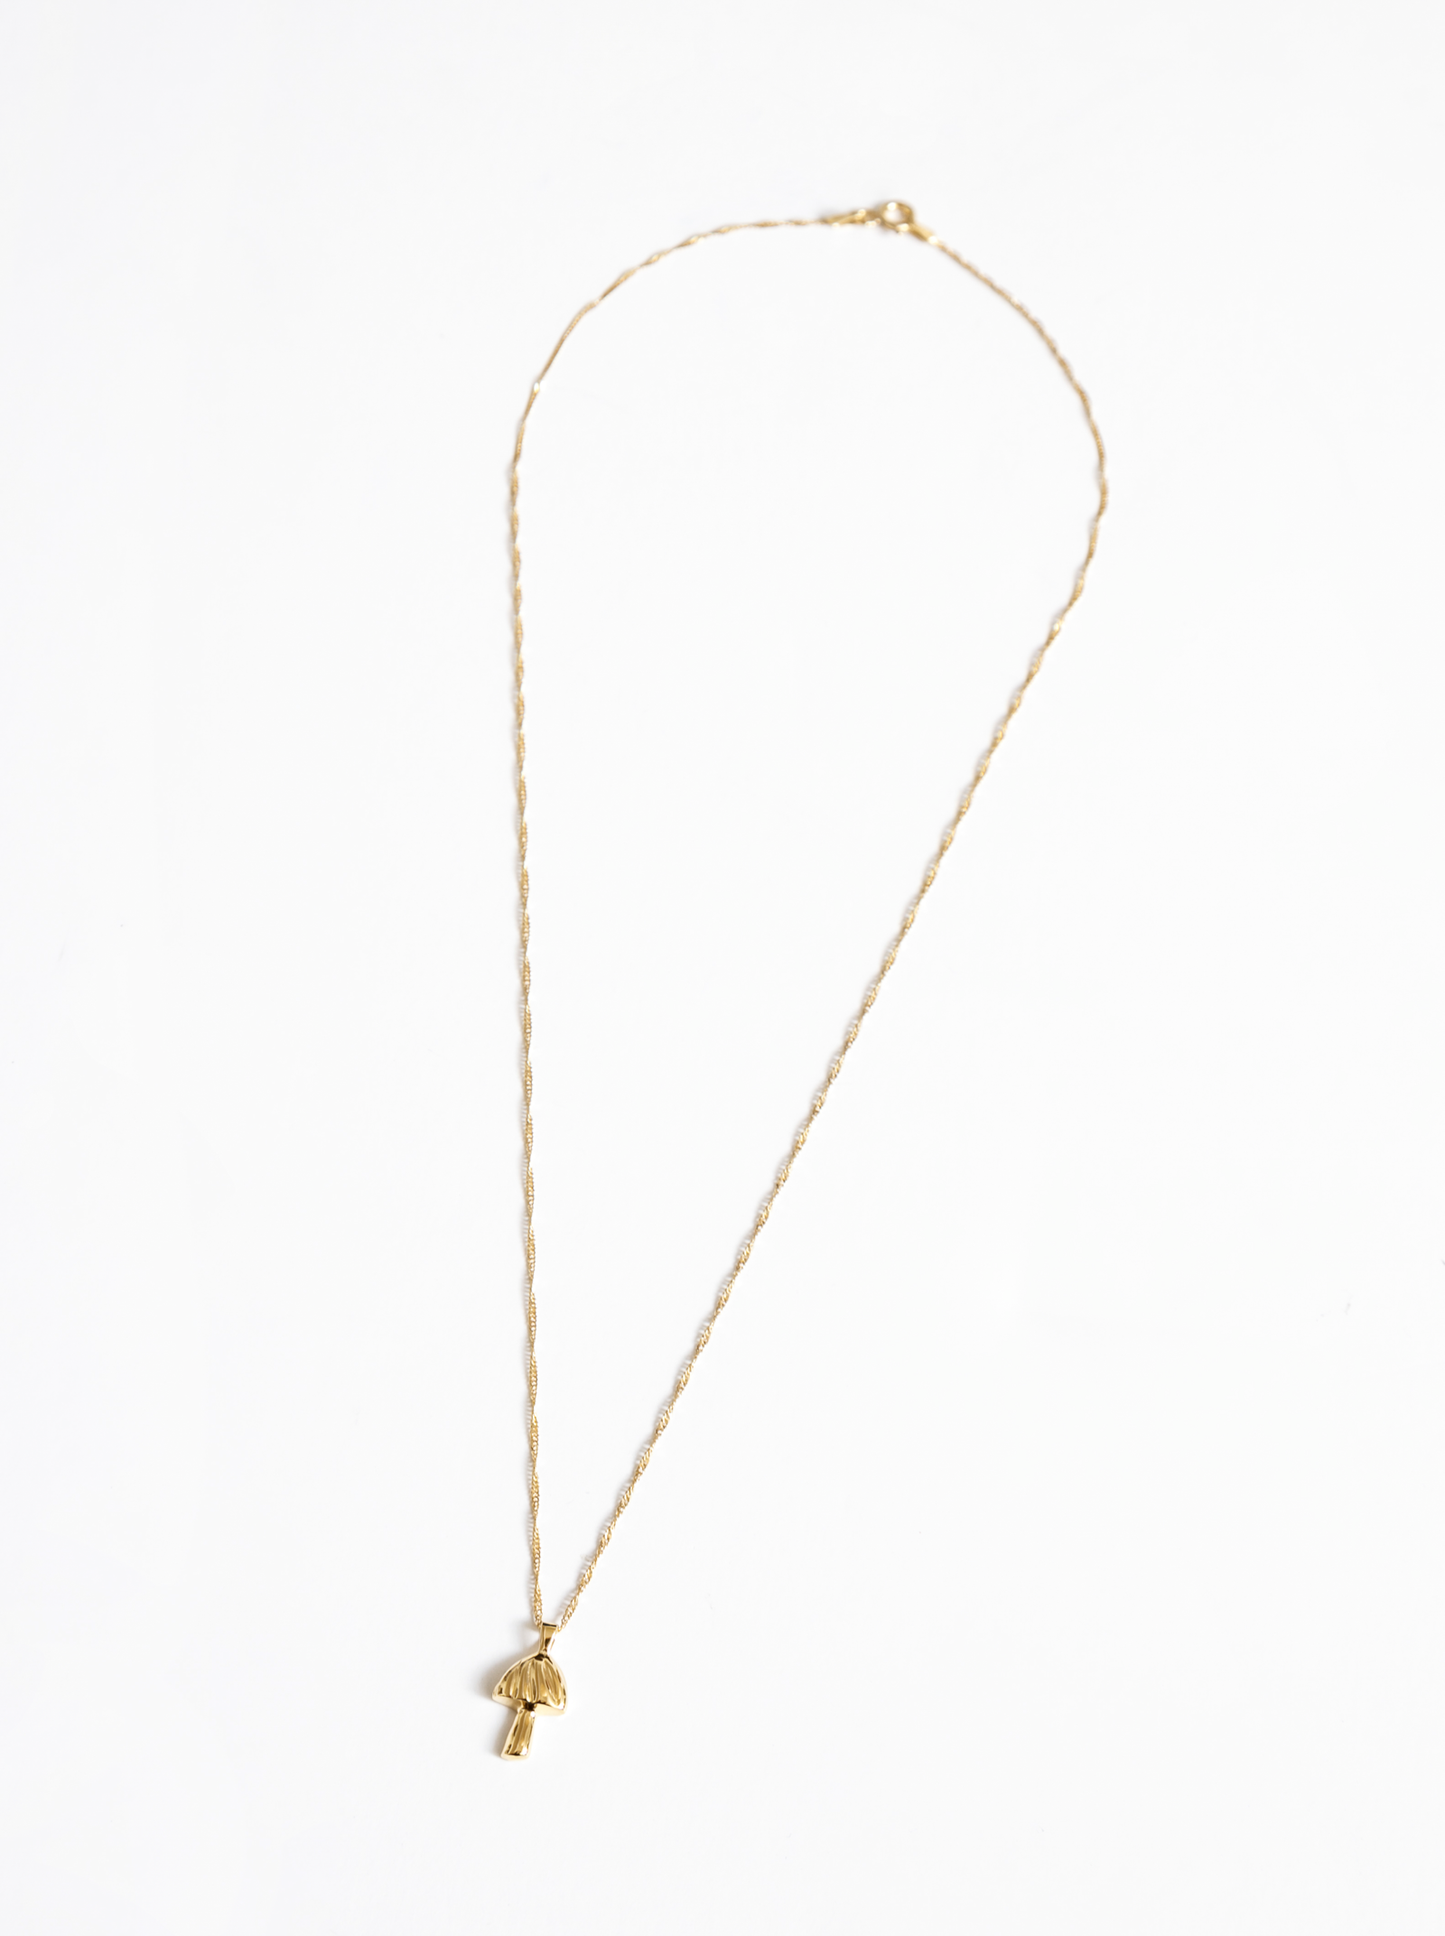 Mushroom Charm Necklace | Gold